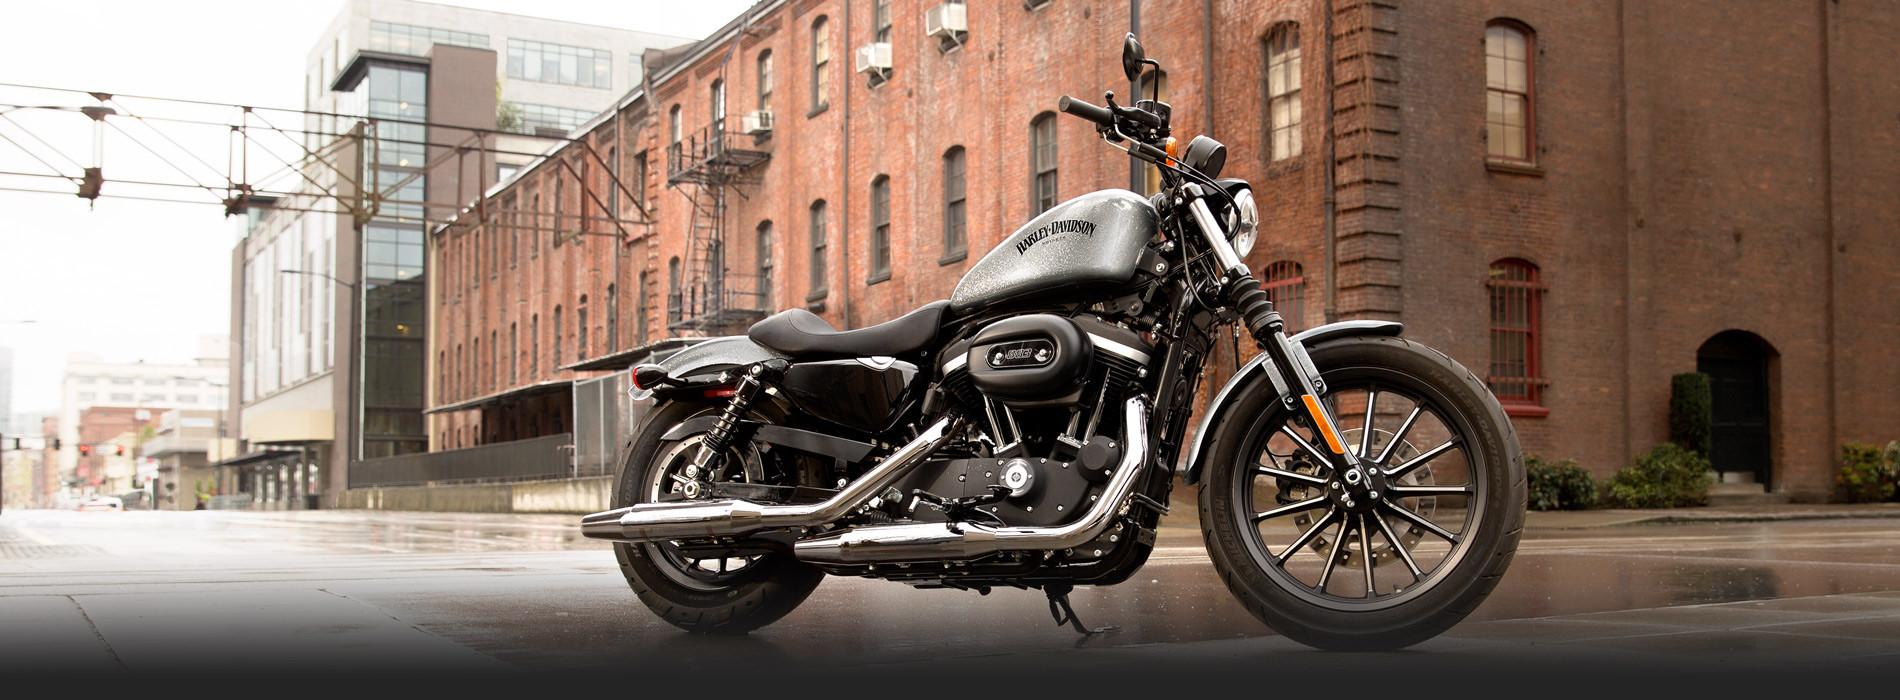 2015 Sportster Iron 883 Bobber Motorcycle Harley Davidson Usa | HD ...